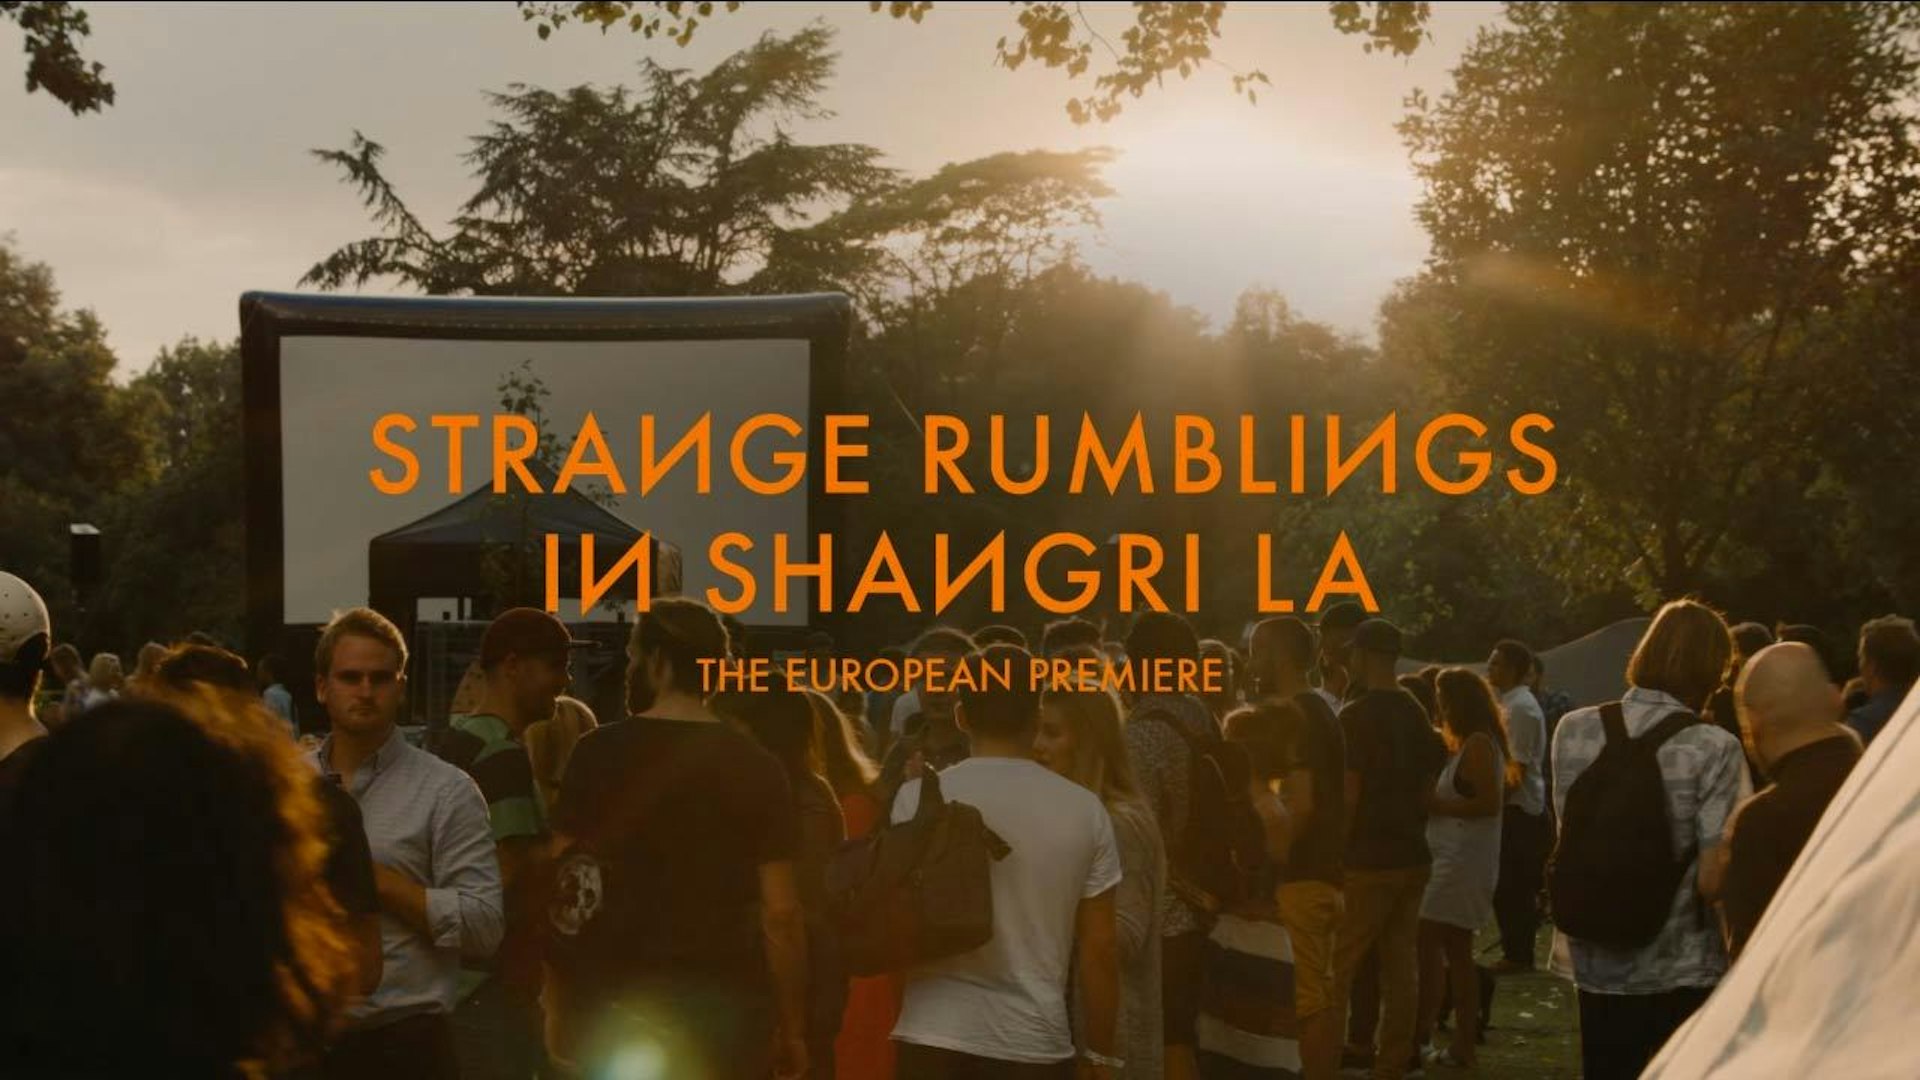 Strange Rumblings in Shangri La